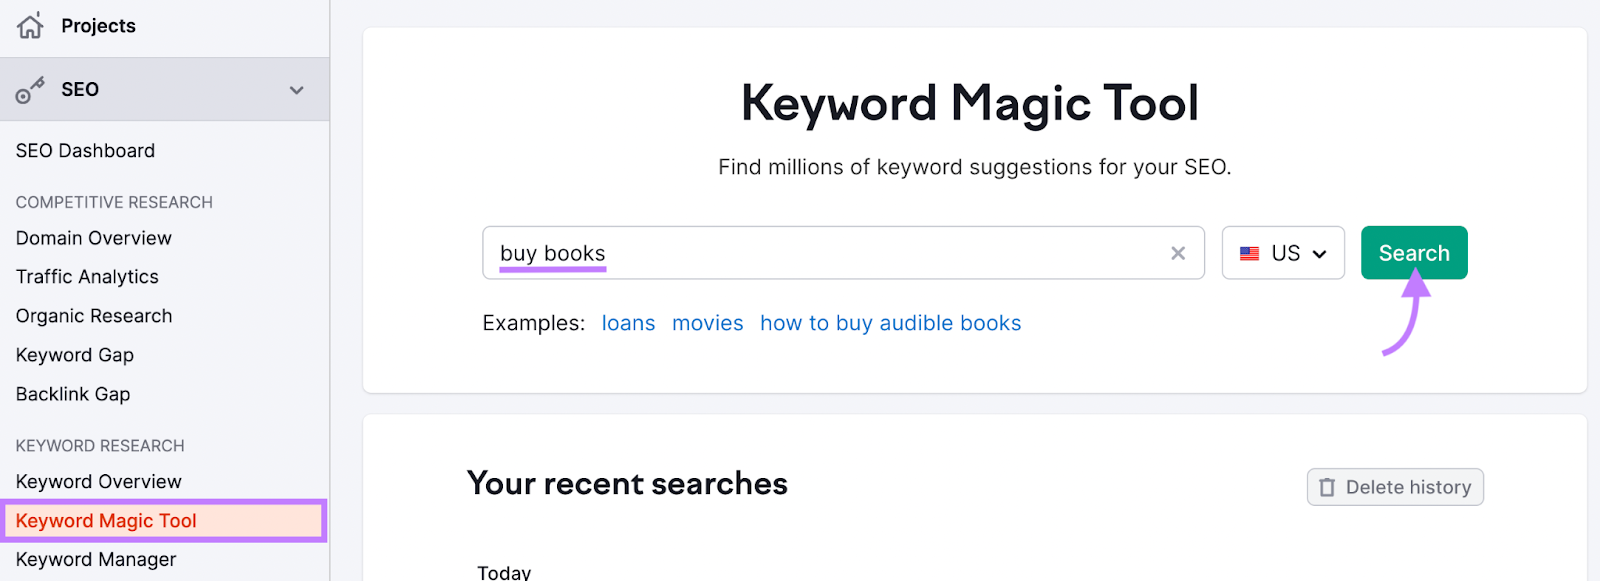 "beli buku" dimasukkan ke dalam bilah pencarian alat ajaib kata kunci